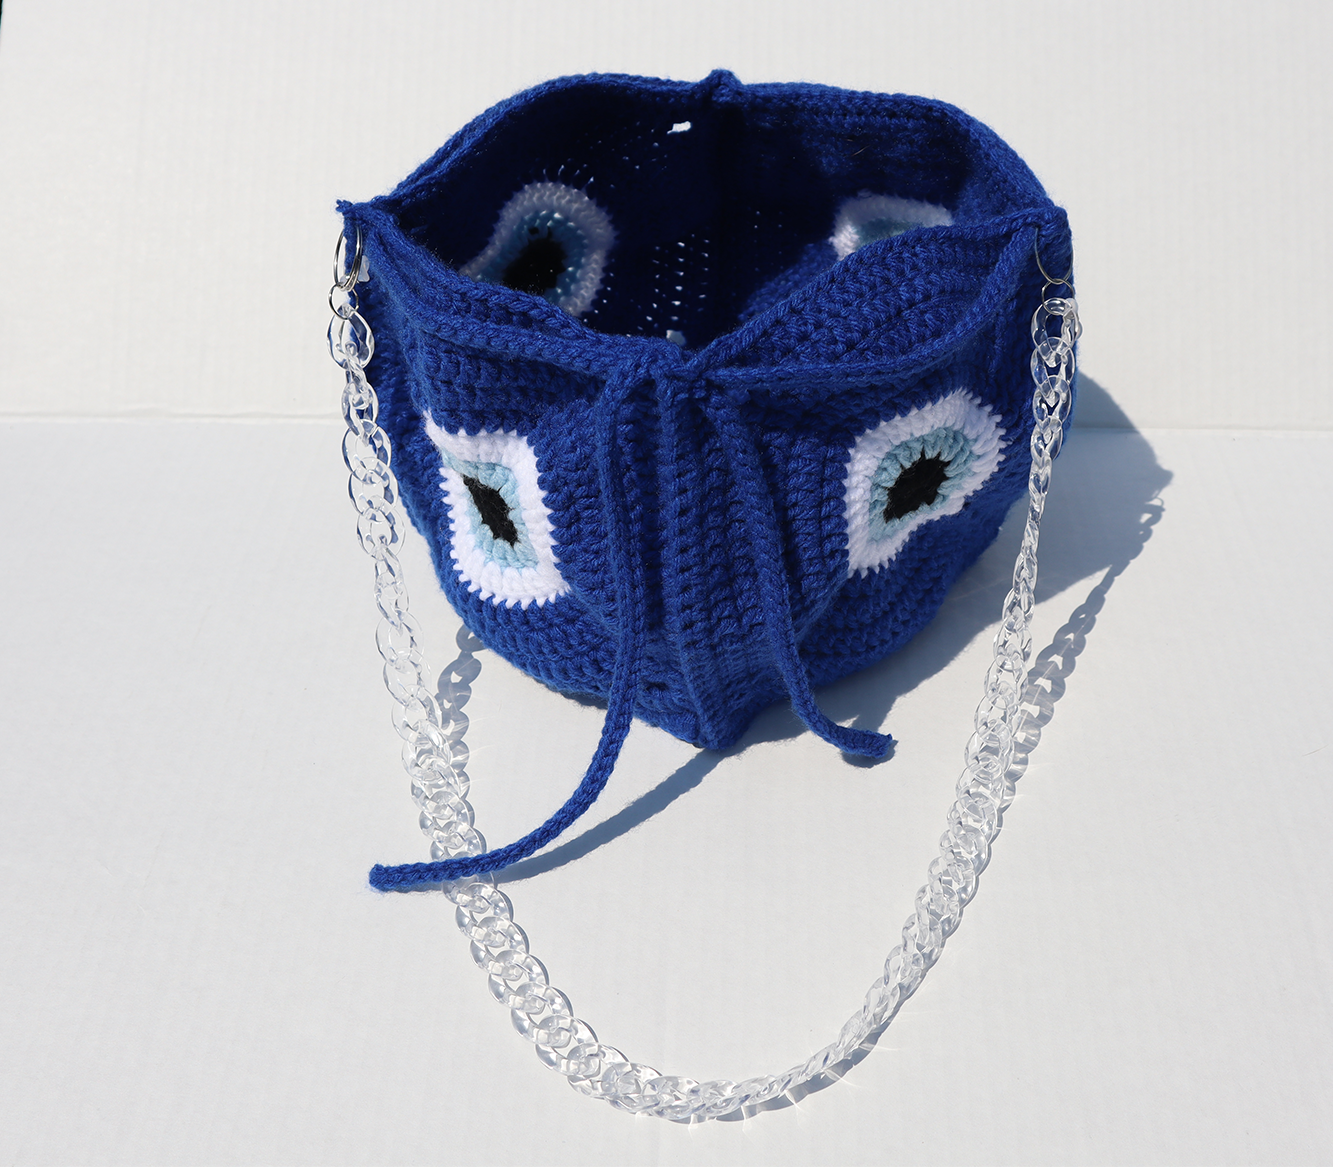 ShopDigitalGirl, Crochet Bags